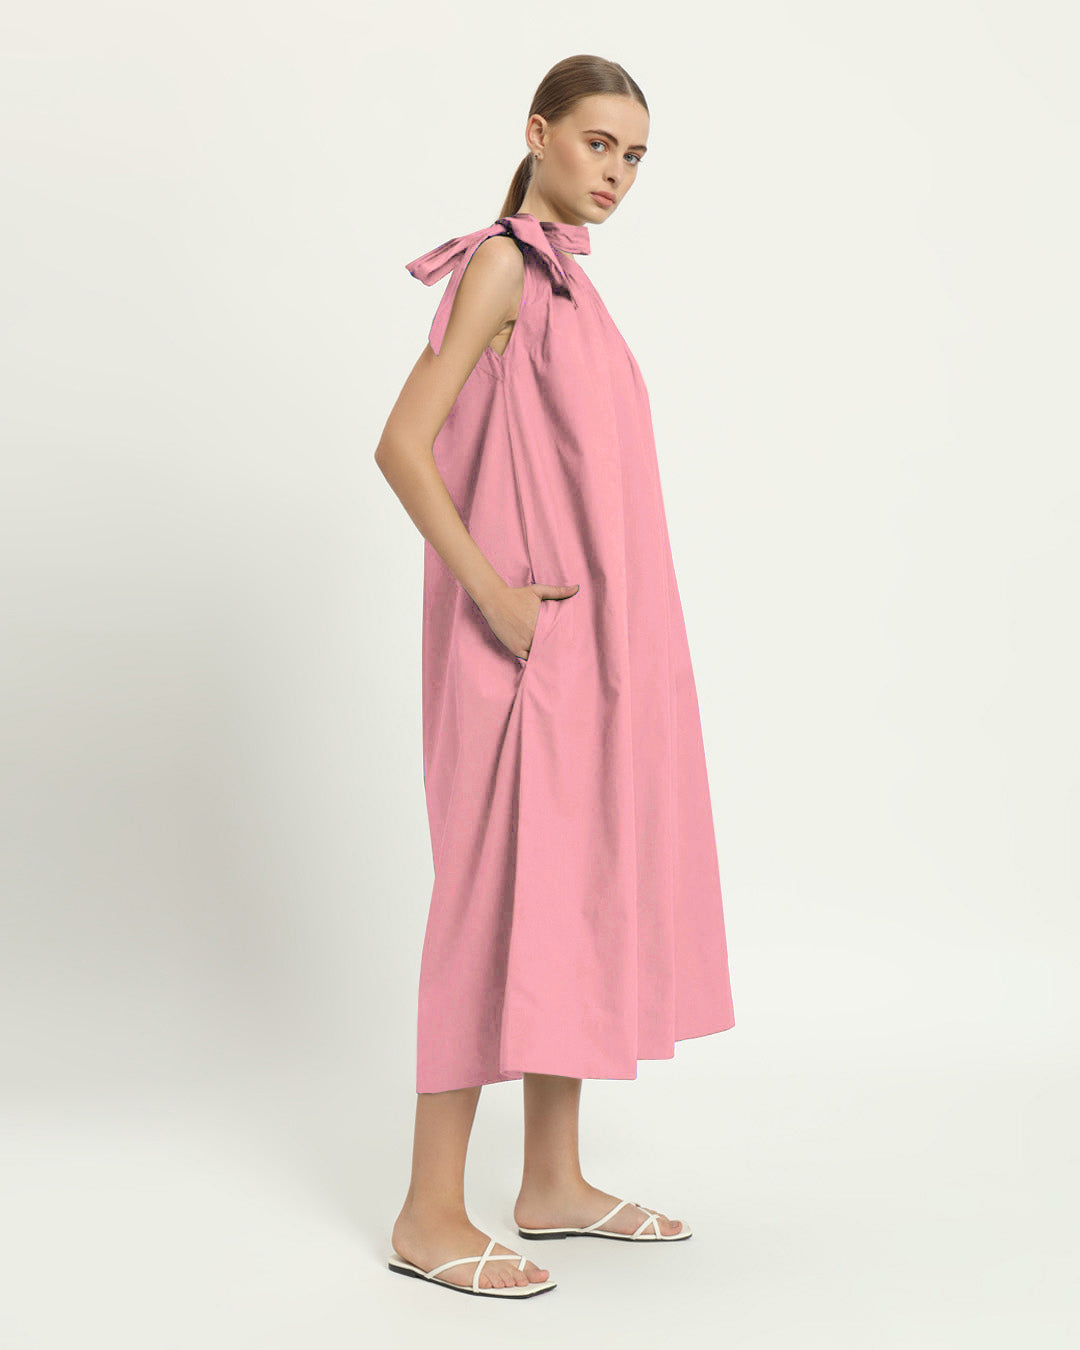 The Strehla Fondant Pink Cotton Dress